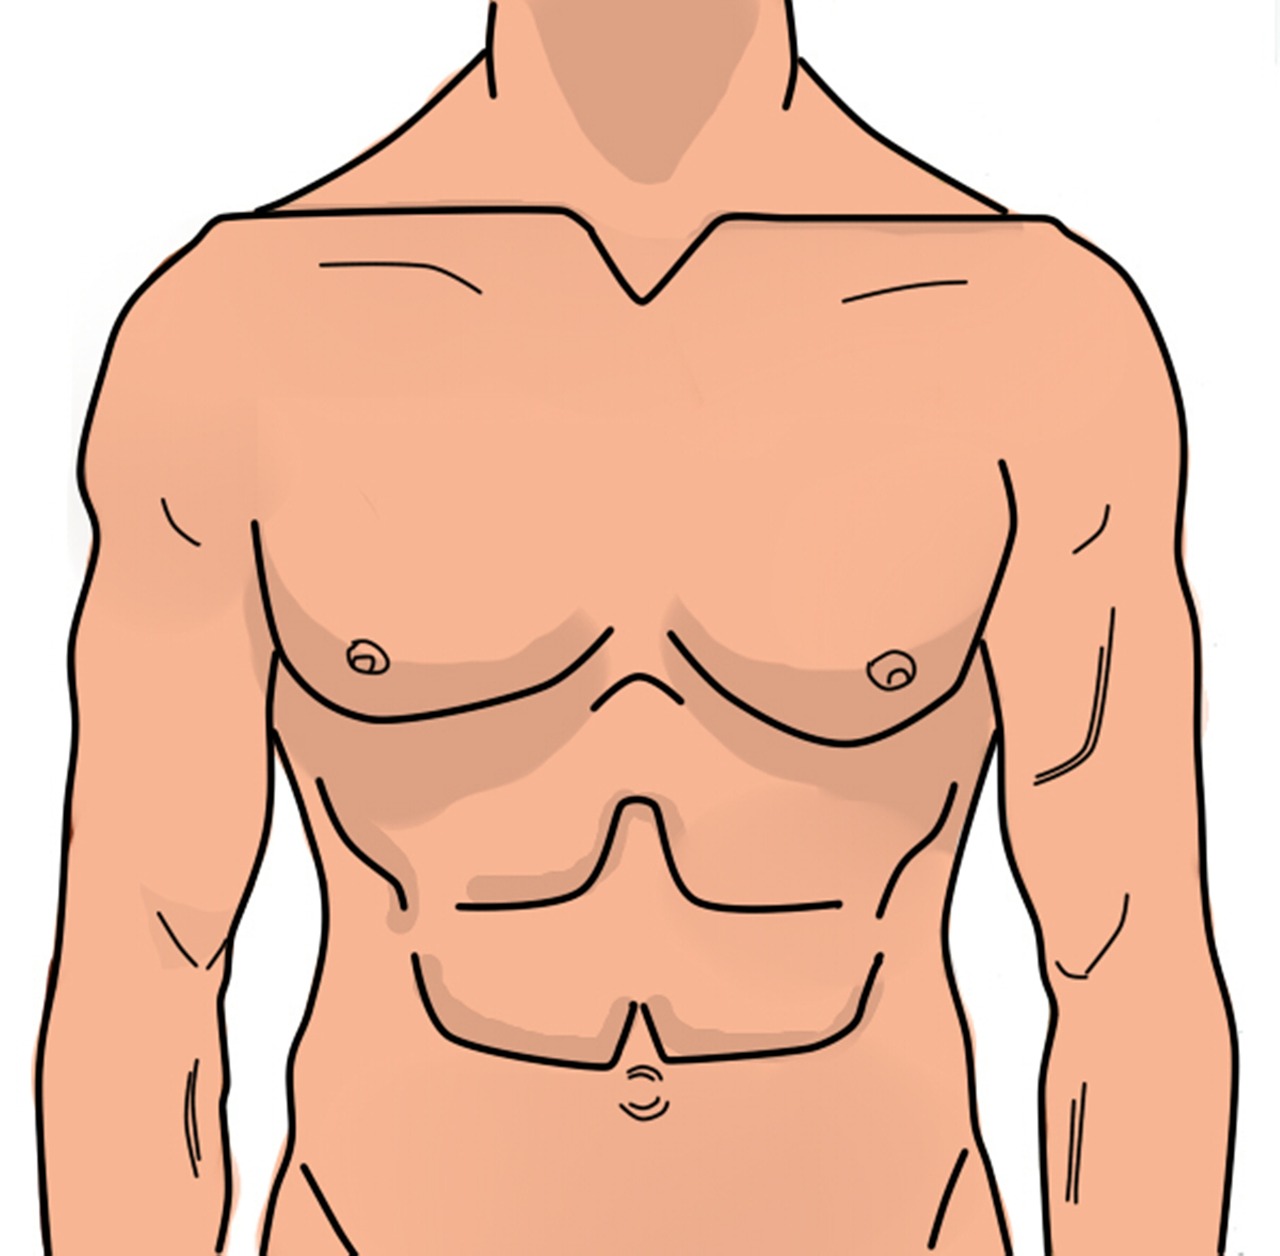 Download free photo of Anatomy,man,abdomen,illustration,free pictures